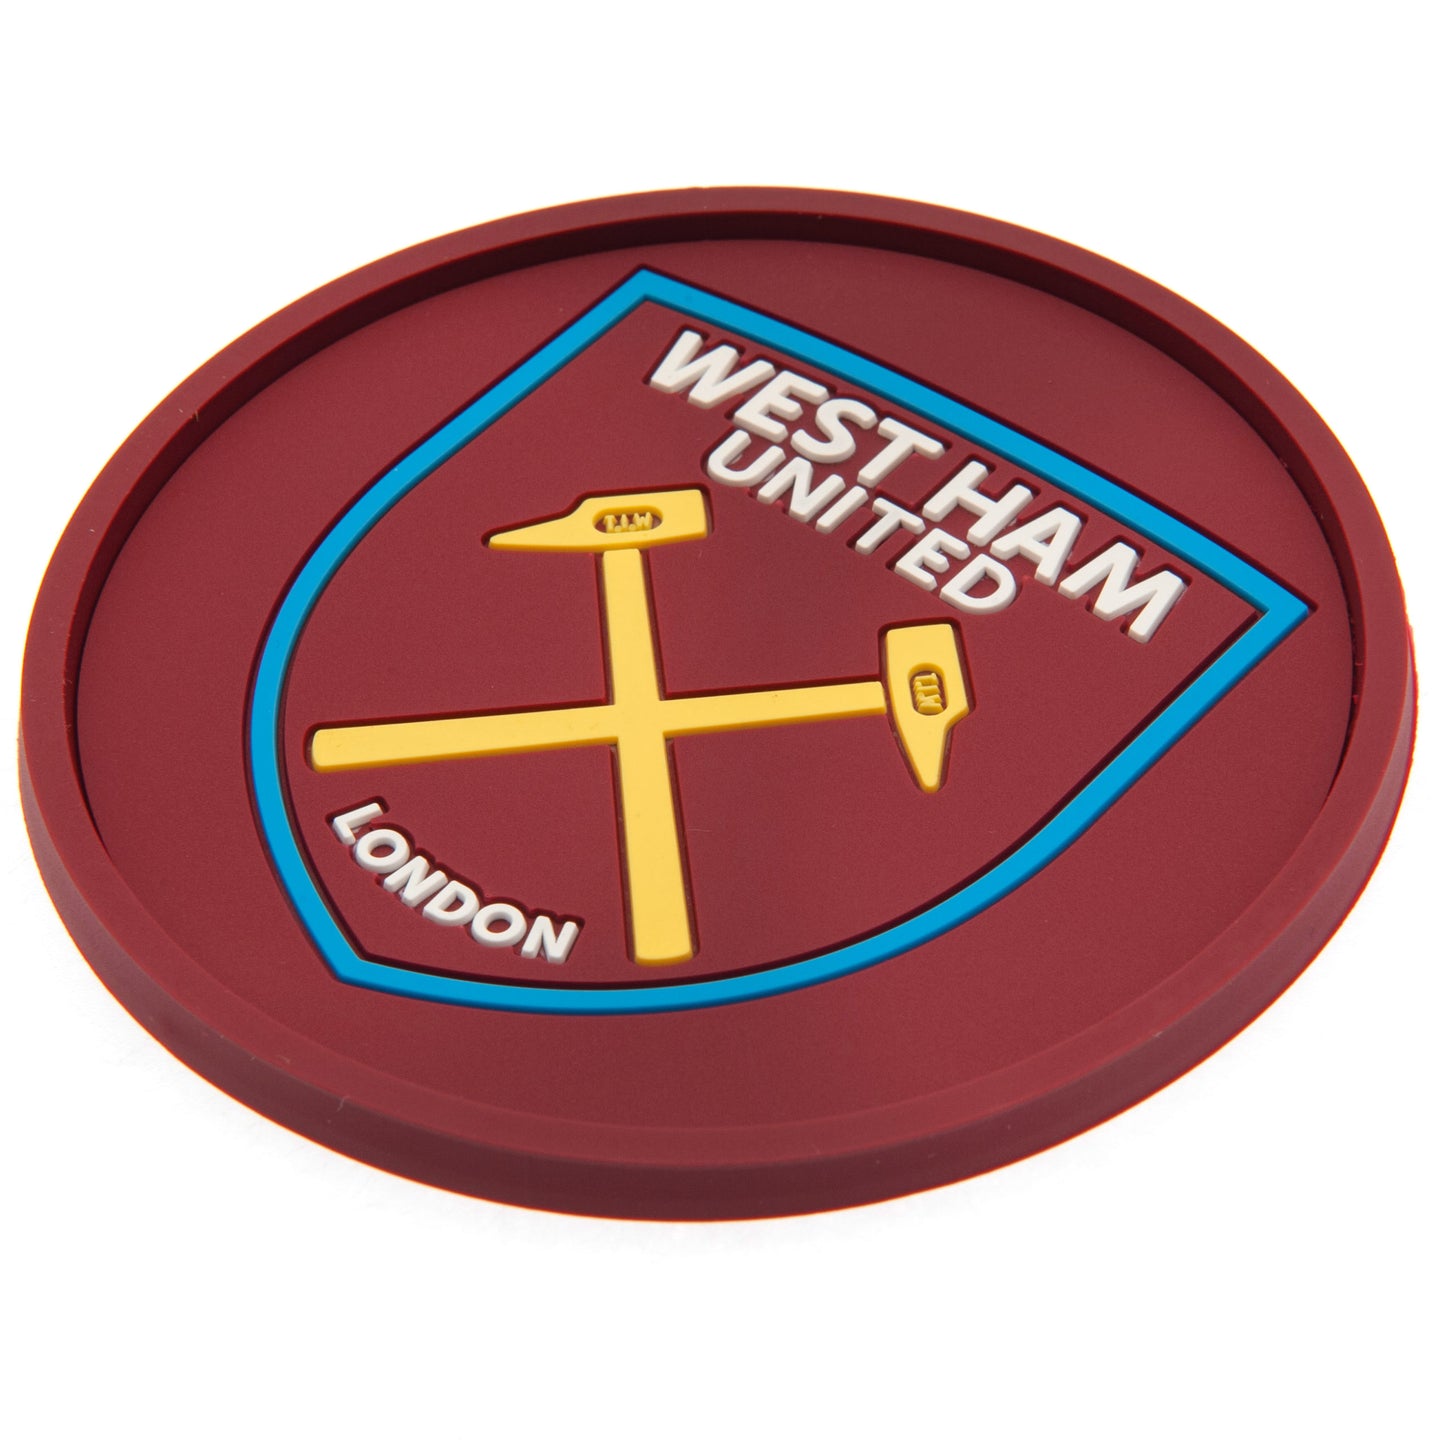 West Ham United FC Silicone Coaster